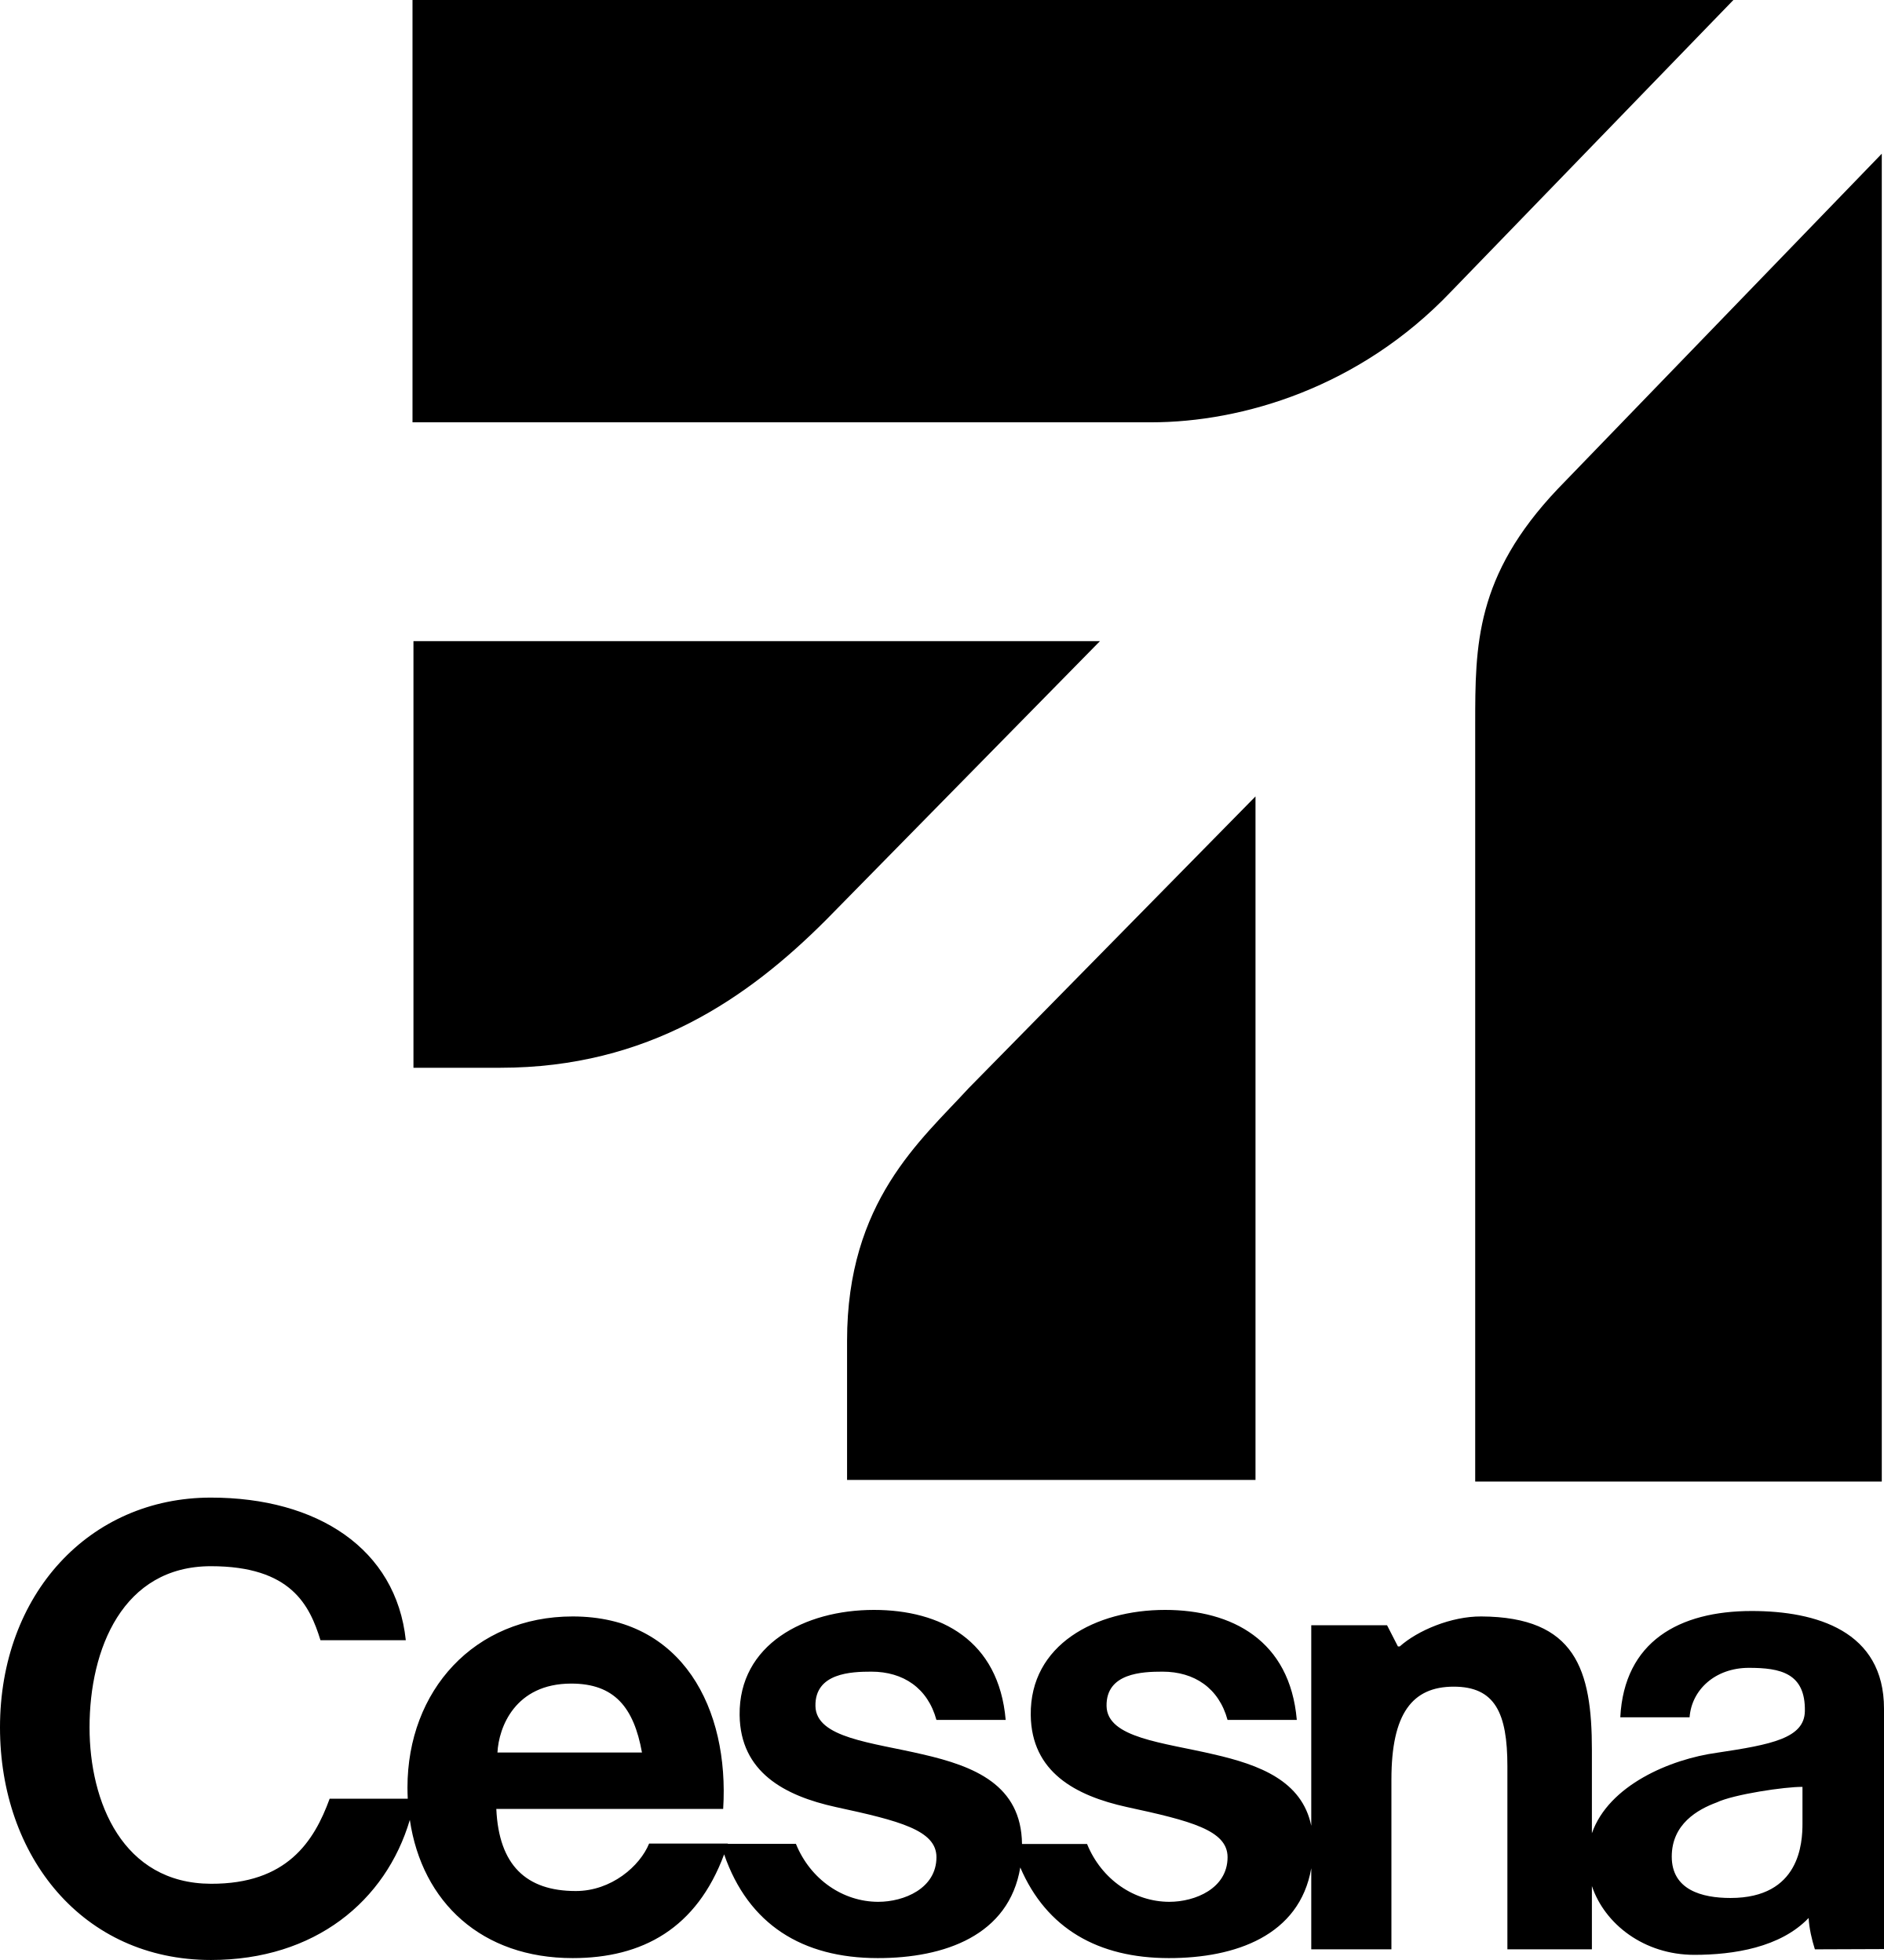 Cessna Logo - Cessna Logo PNG Transparent & SVG Vector - Freebie Supply